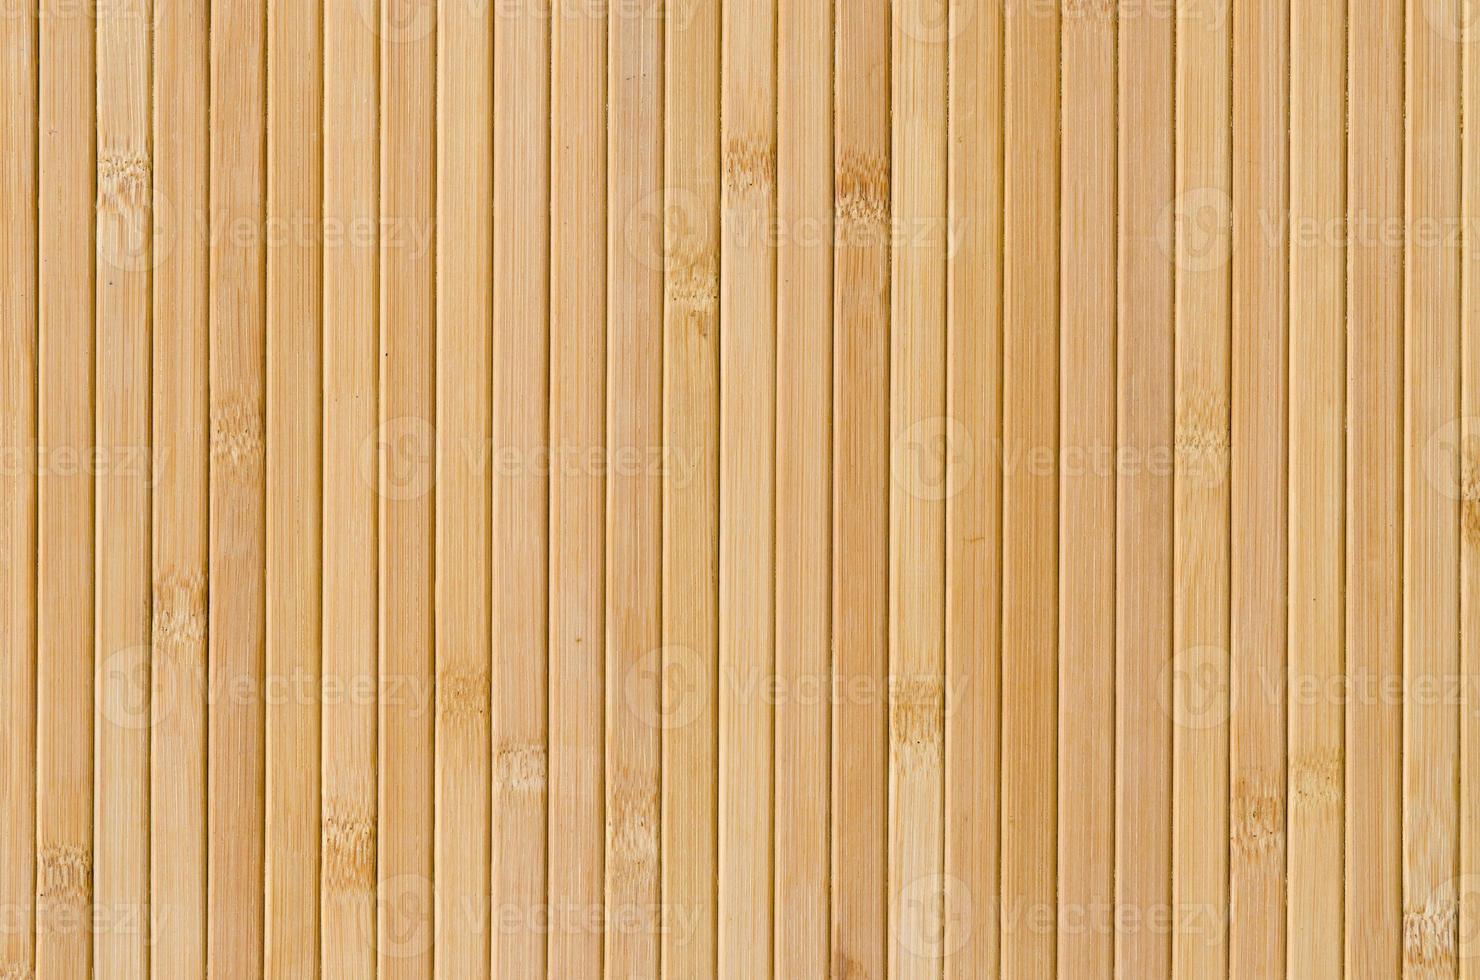 Wooden Bamboo Background. Wood Bamboo Texture Closeup Stock Photo - Image  of backdrop, edge: 192208318